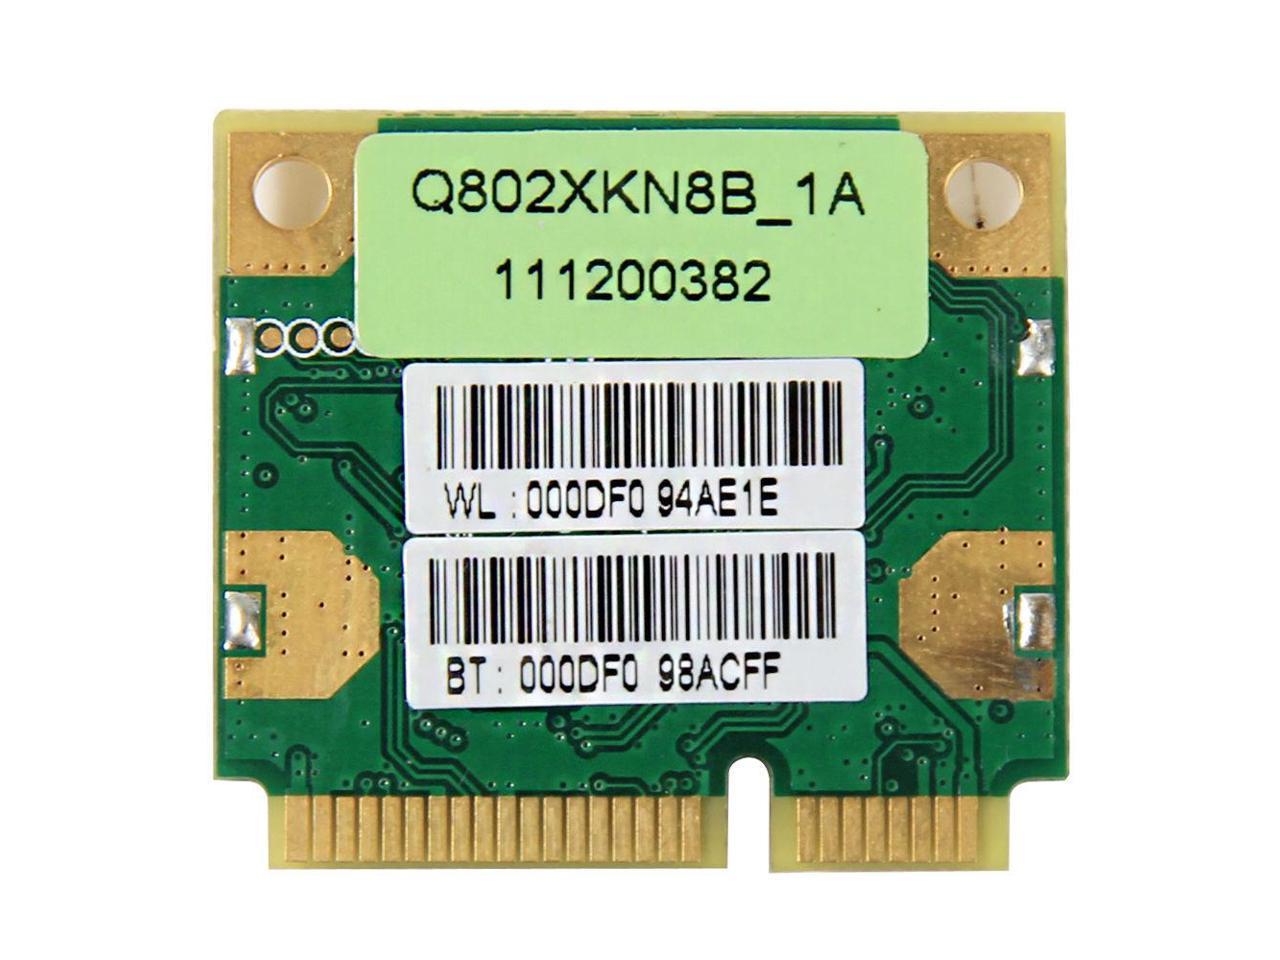 Ralink 802.11. Ralink rt5390. Плата адаптера 1x1 11b/g/n Wireless lan PCI Express half Mini Card. Half Mini PCI-E WIFI. 802.11N Wireless lan Card характеристики.